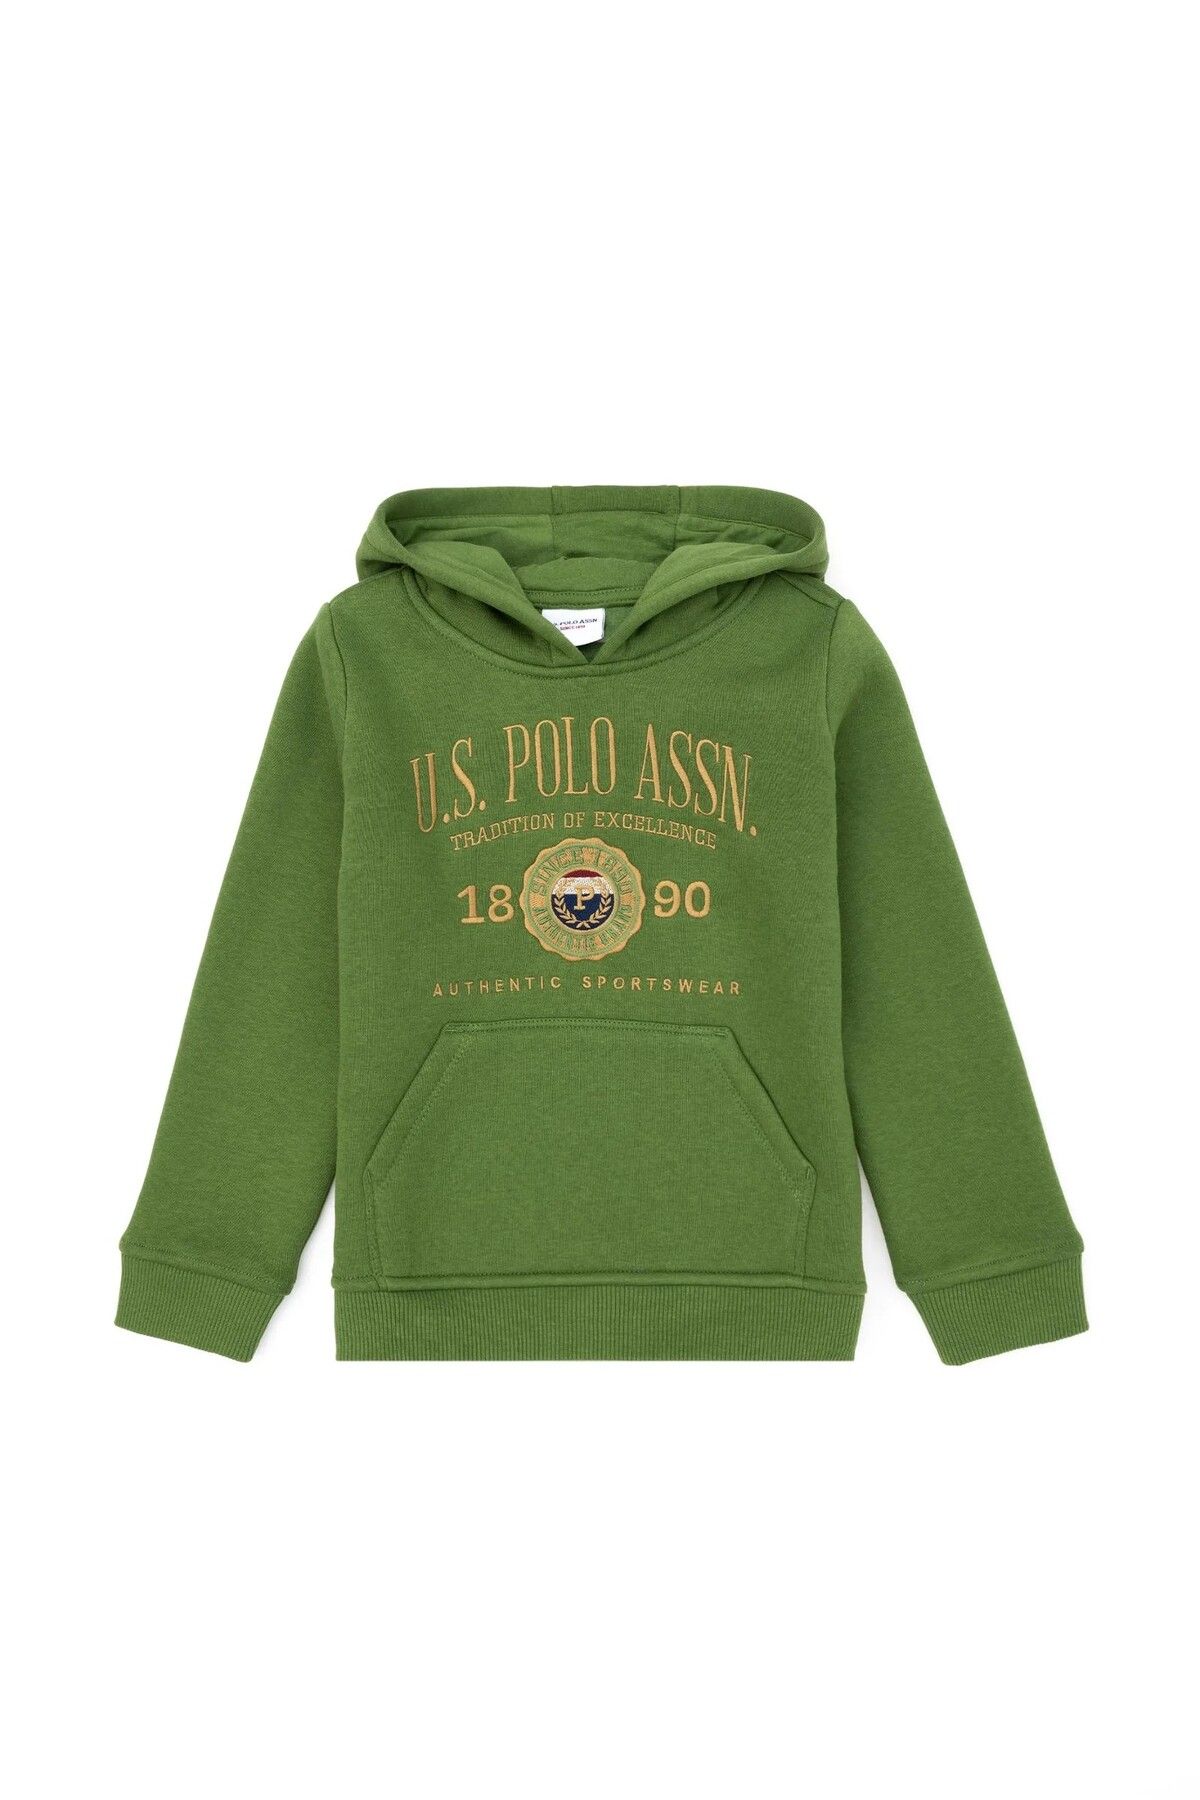 U.S. Polo Assn. U.S. Polo Assn. U.S. Polo Assn. Erkek Çocuk Kapüşonlu Yeşil Sweatshirt